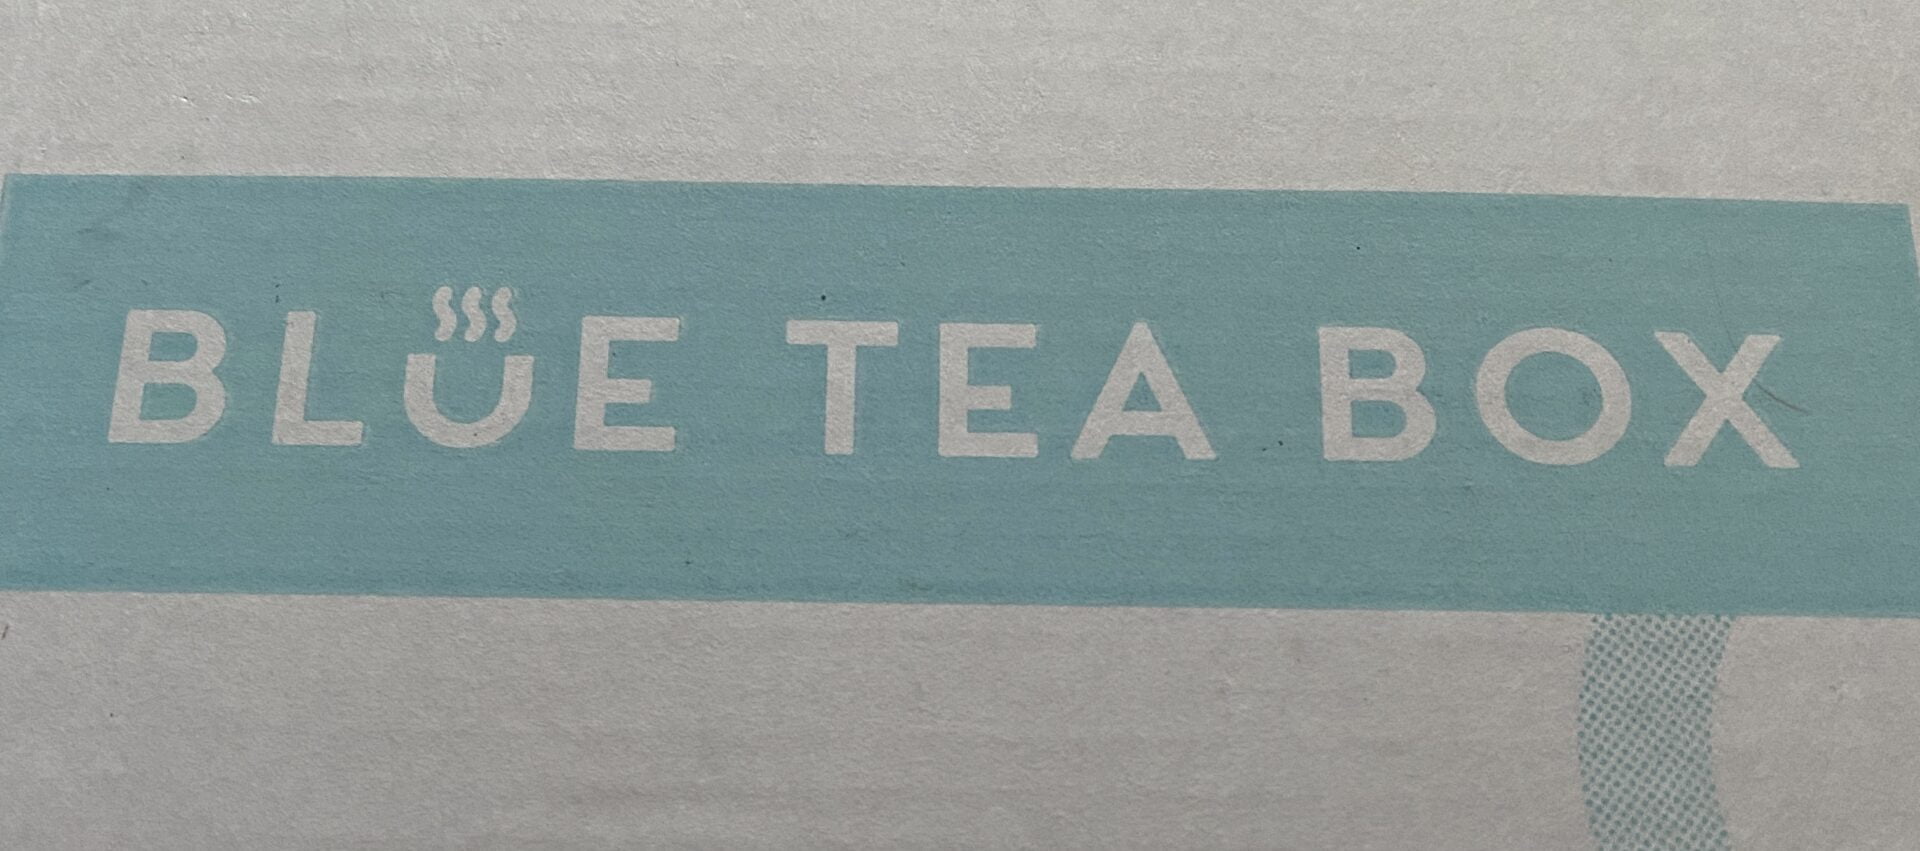 BLUE TEA BOX REVIEW